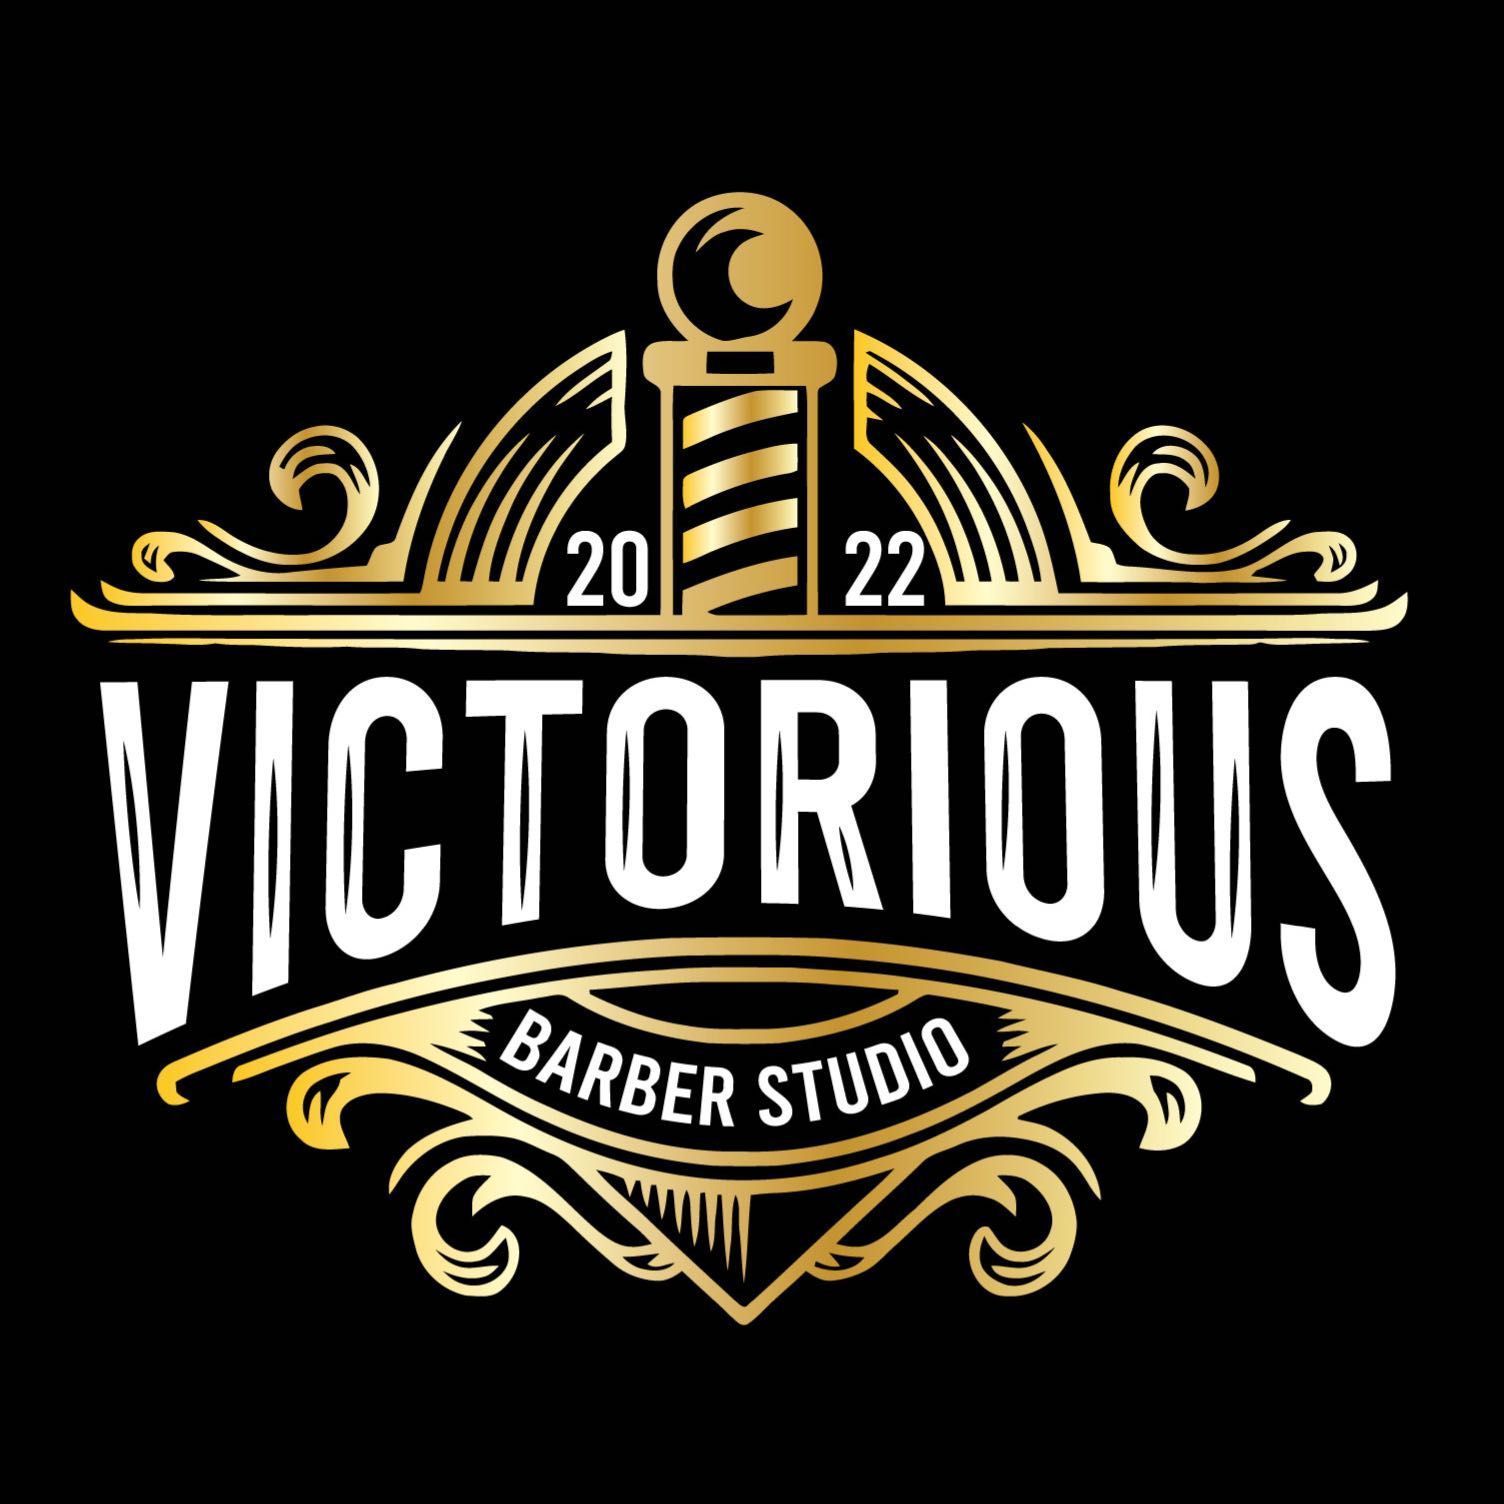 Victorious Barber Studio, 1511 Malone st, Denton, 76201